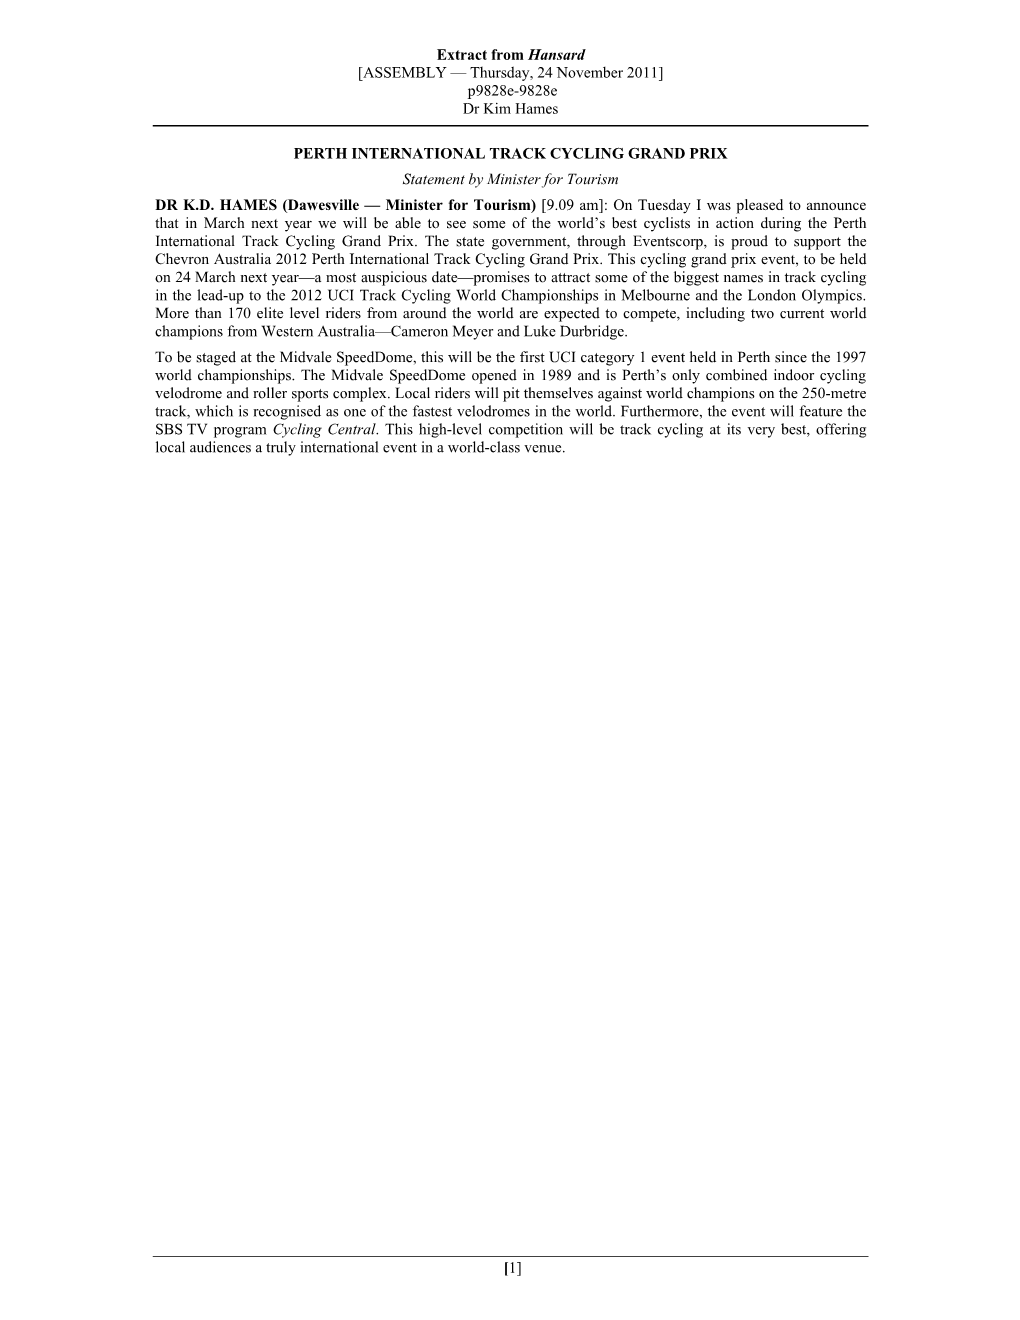 Extract from Hansard [ASSEMBLY — Thursday, 24 November 2011] P9828e-9828E Dr Kim Hames [1] PERTH INTERNATIONAL TRACK CYCLING G